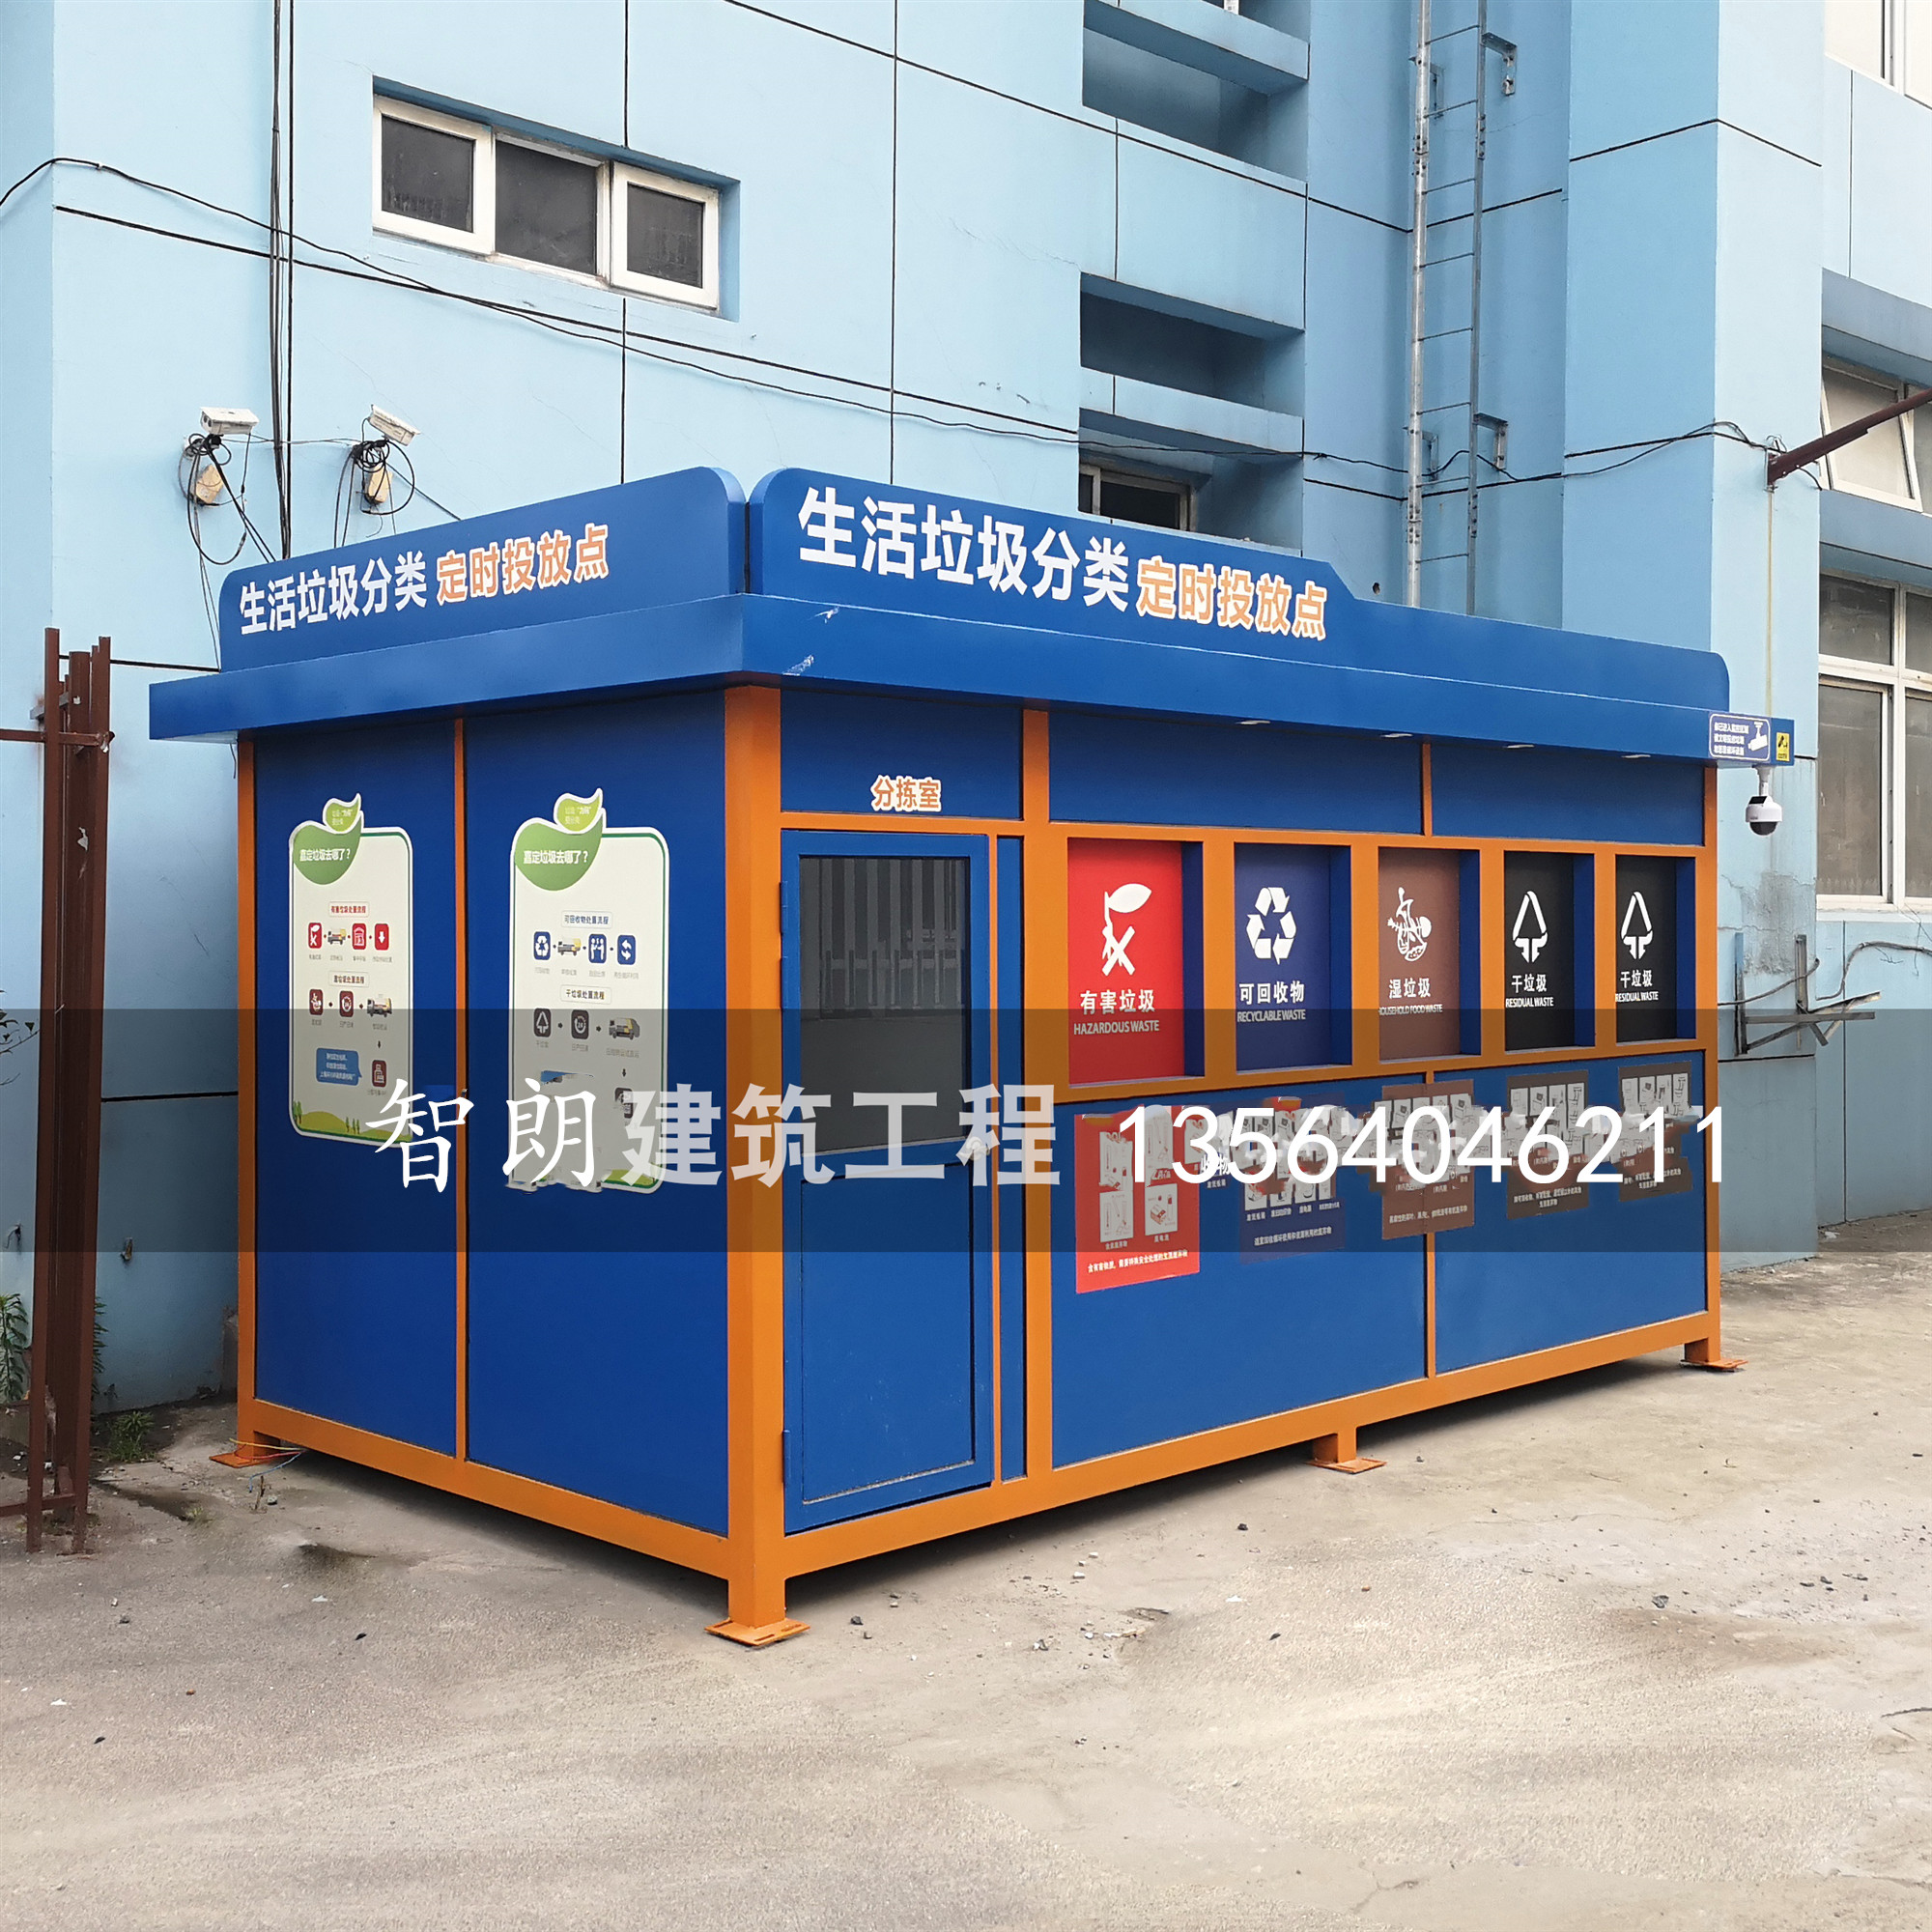 LJF011垃圾房生产厂家 直销各式户外大型环保移动垃圾亭【上海智朗建筑工程有限公司】